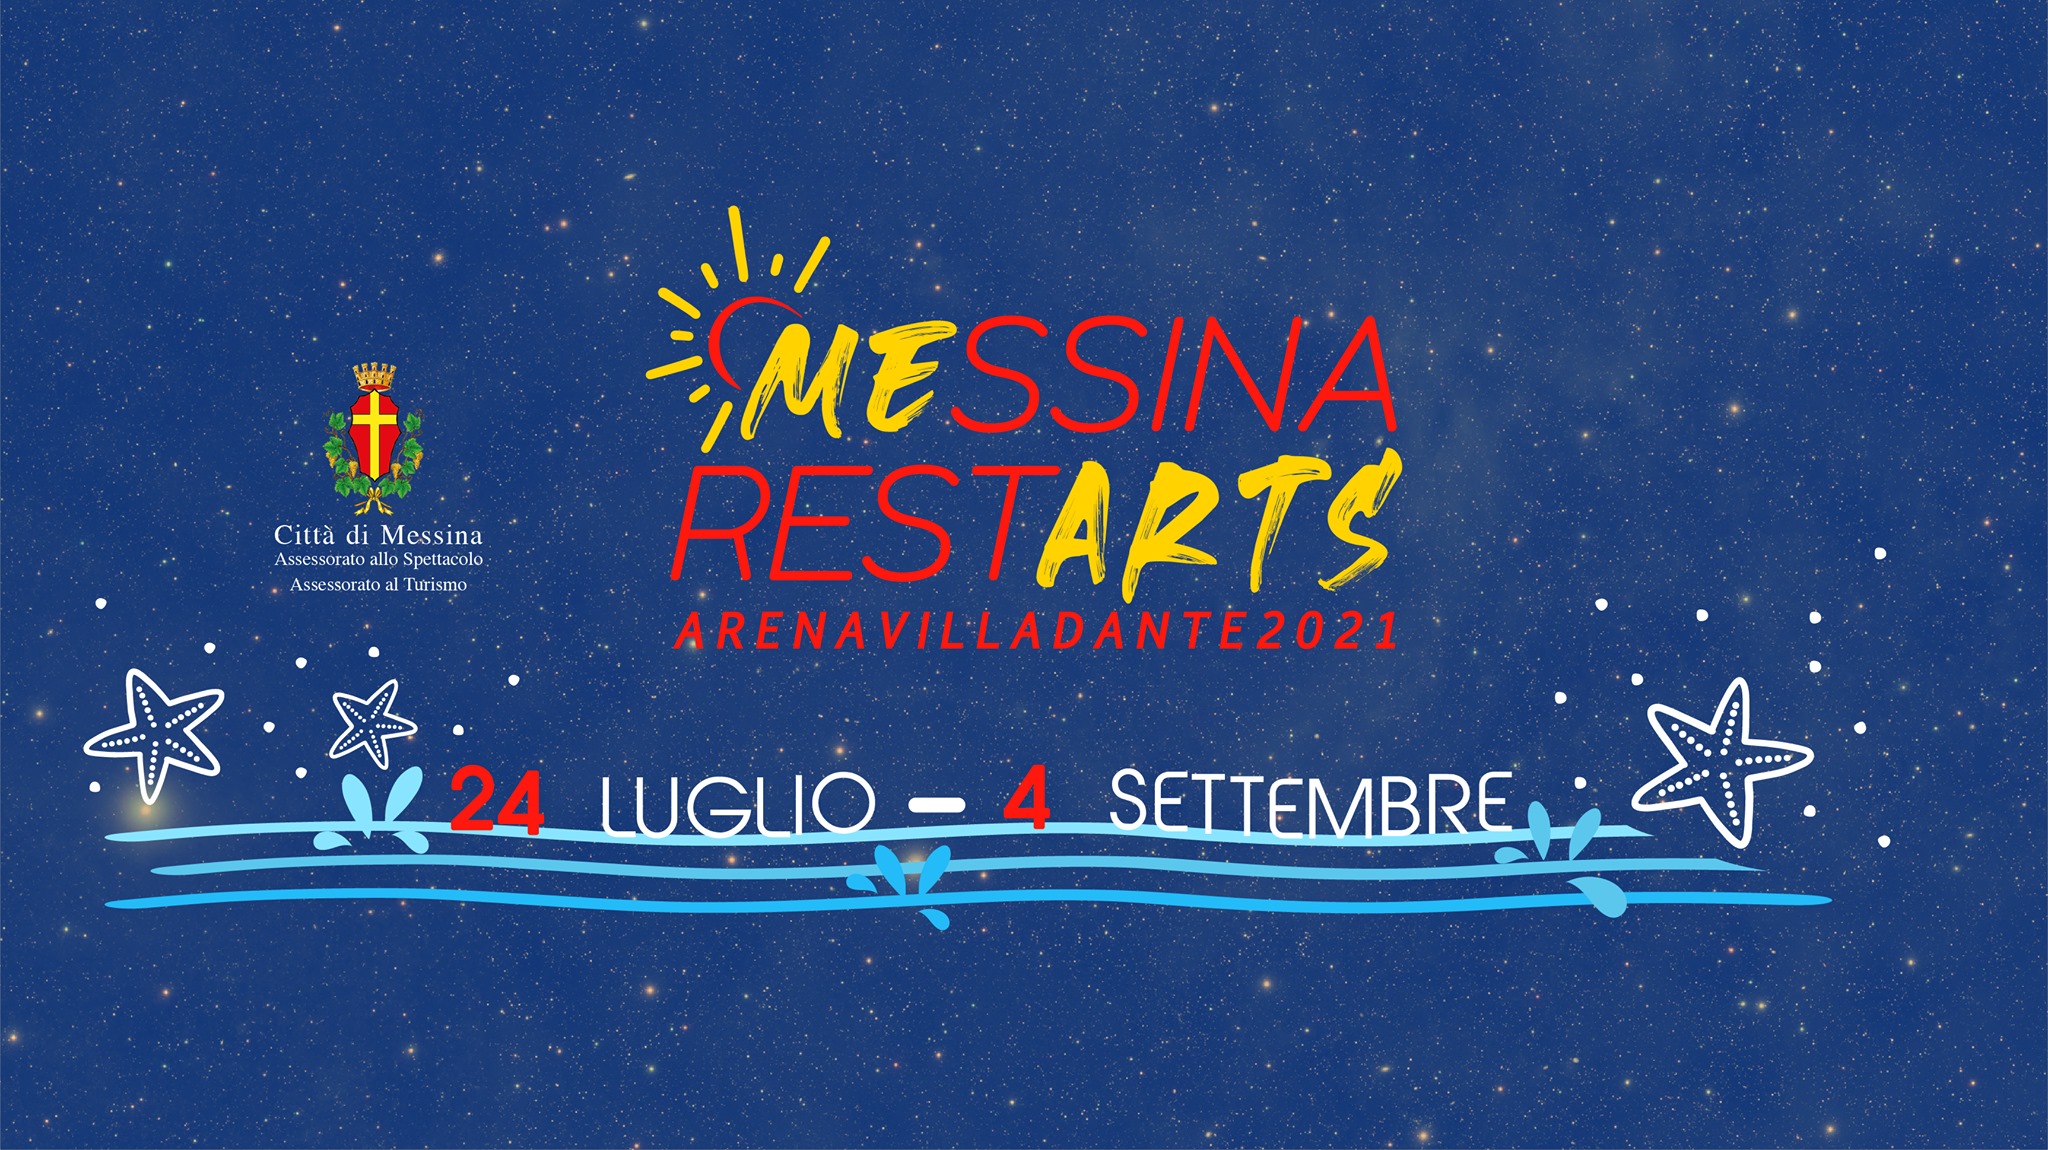 Messina restarts